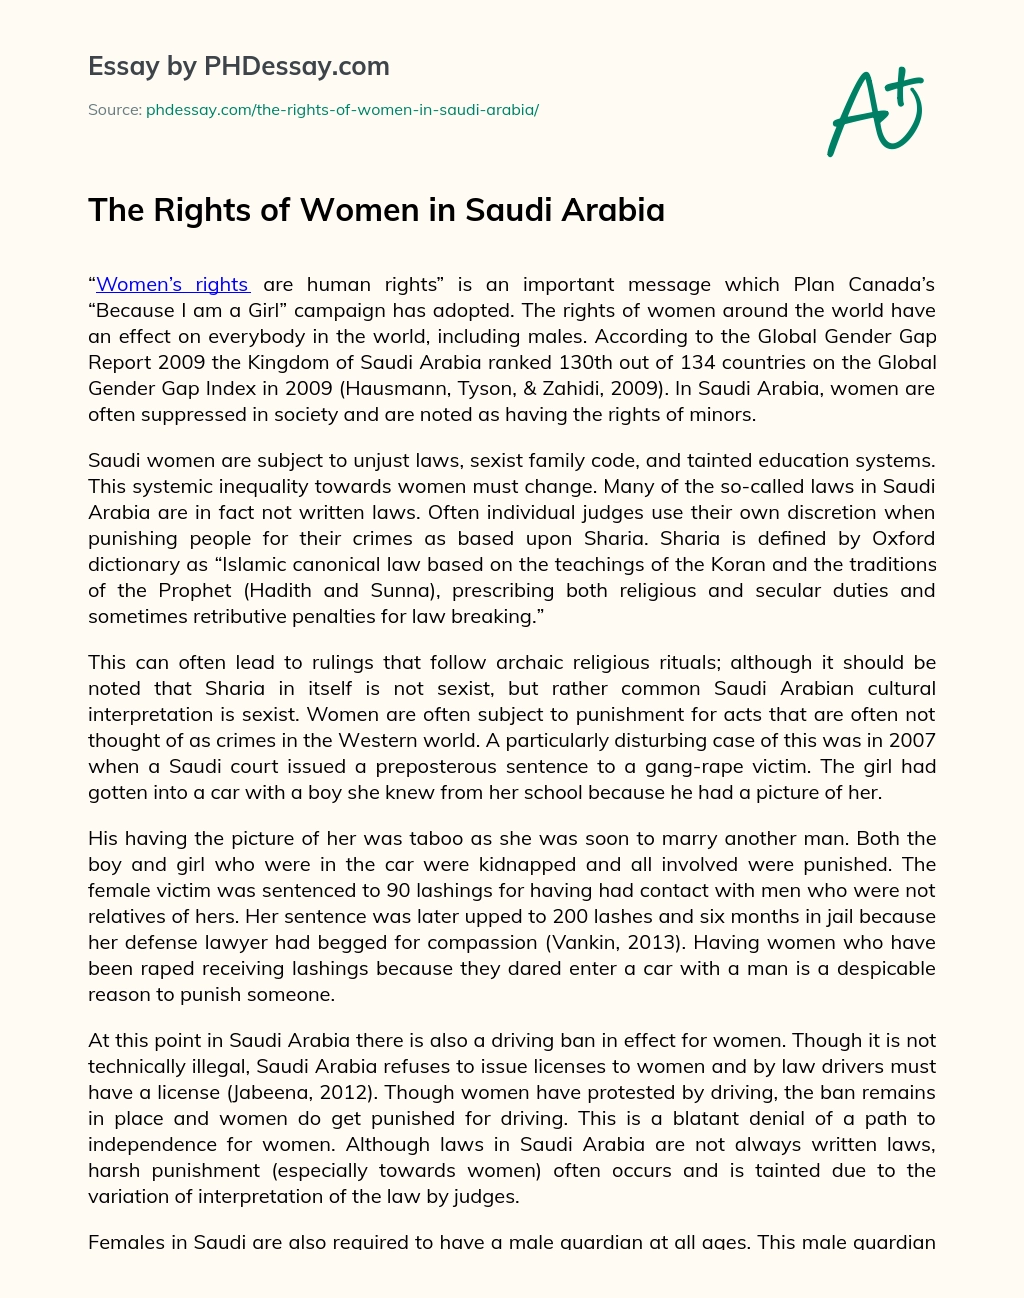 The Rights of Women in Saudi Arabia essay